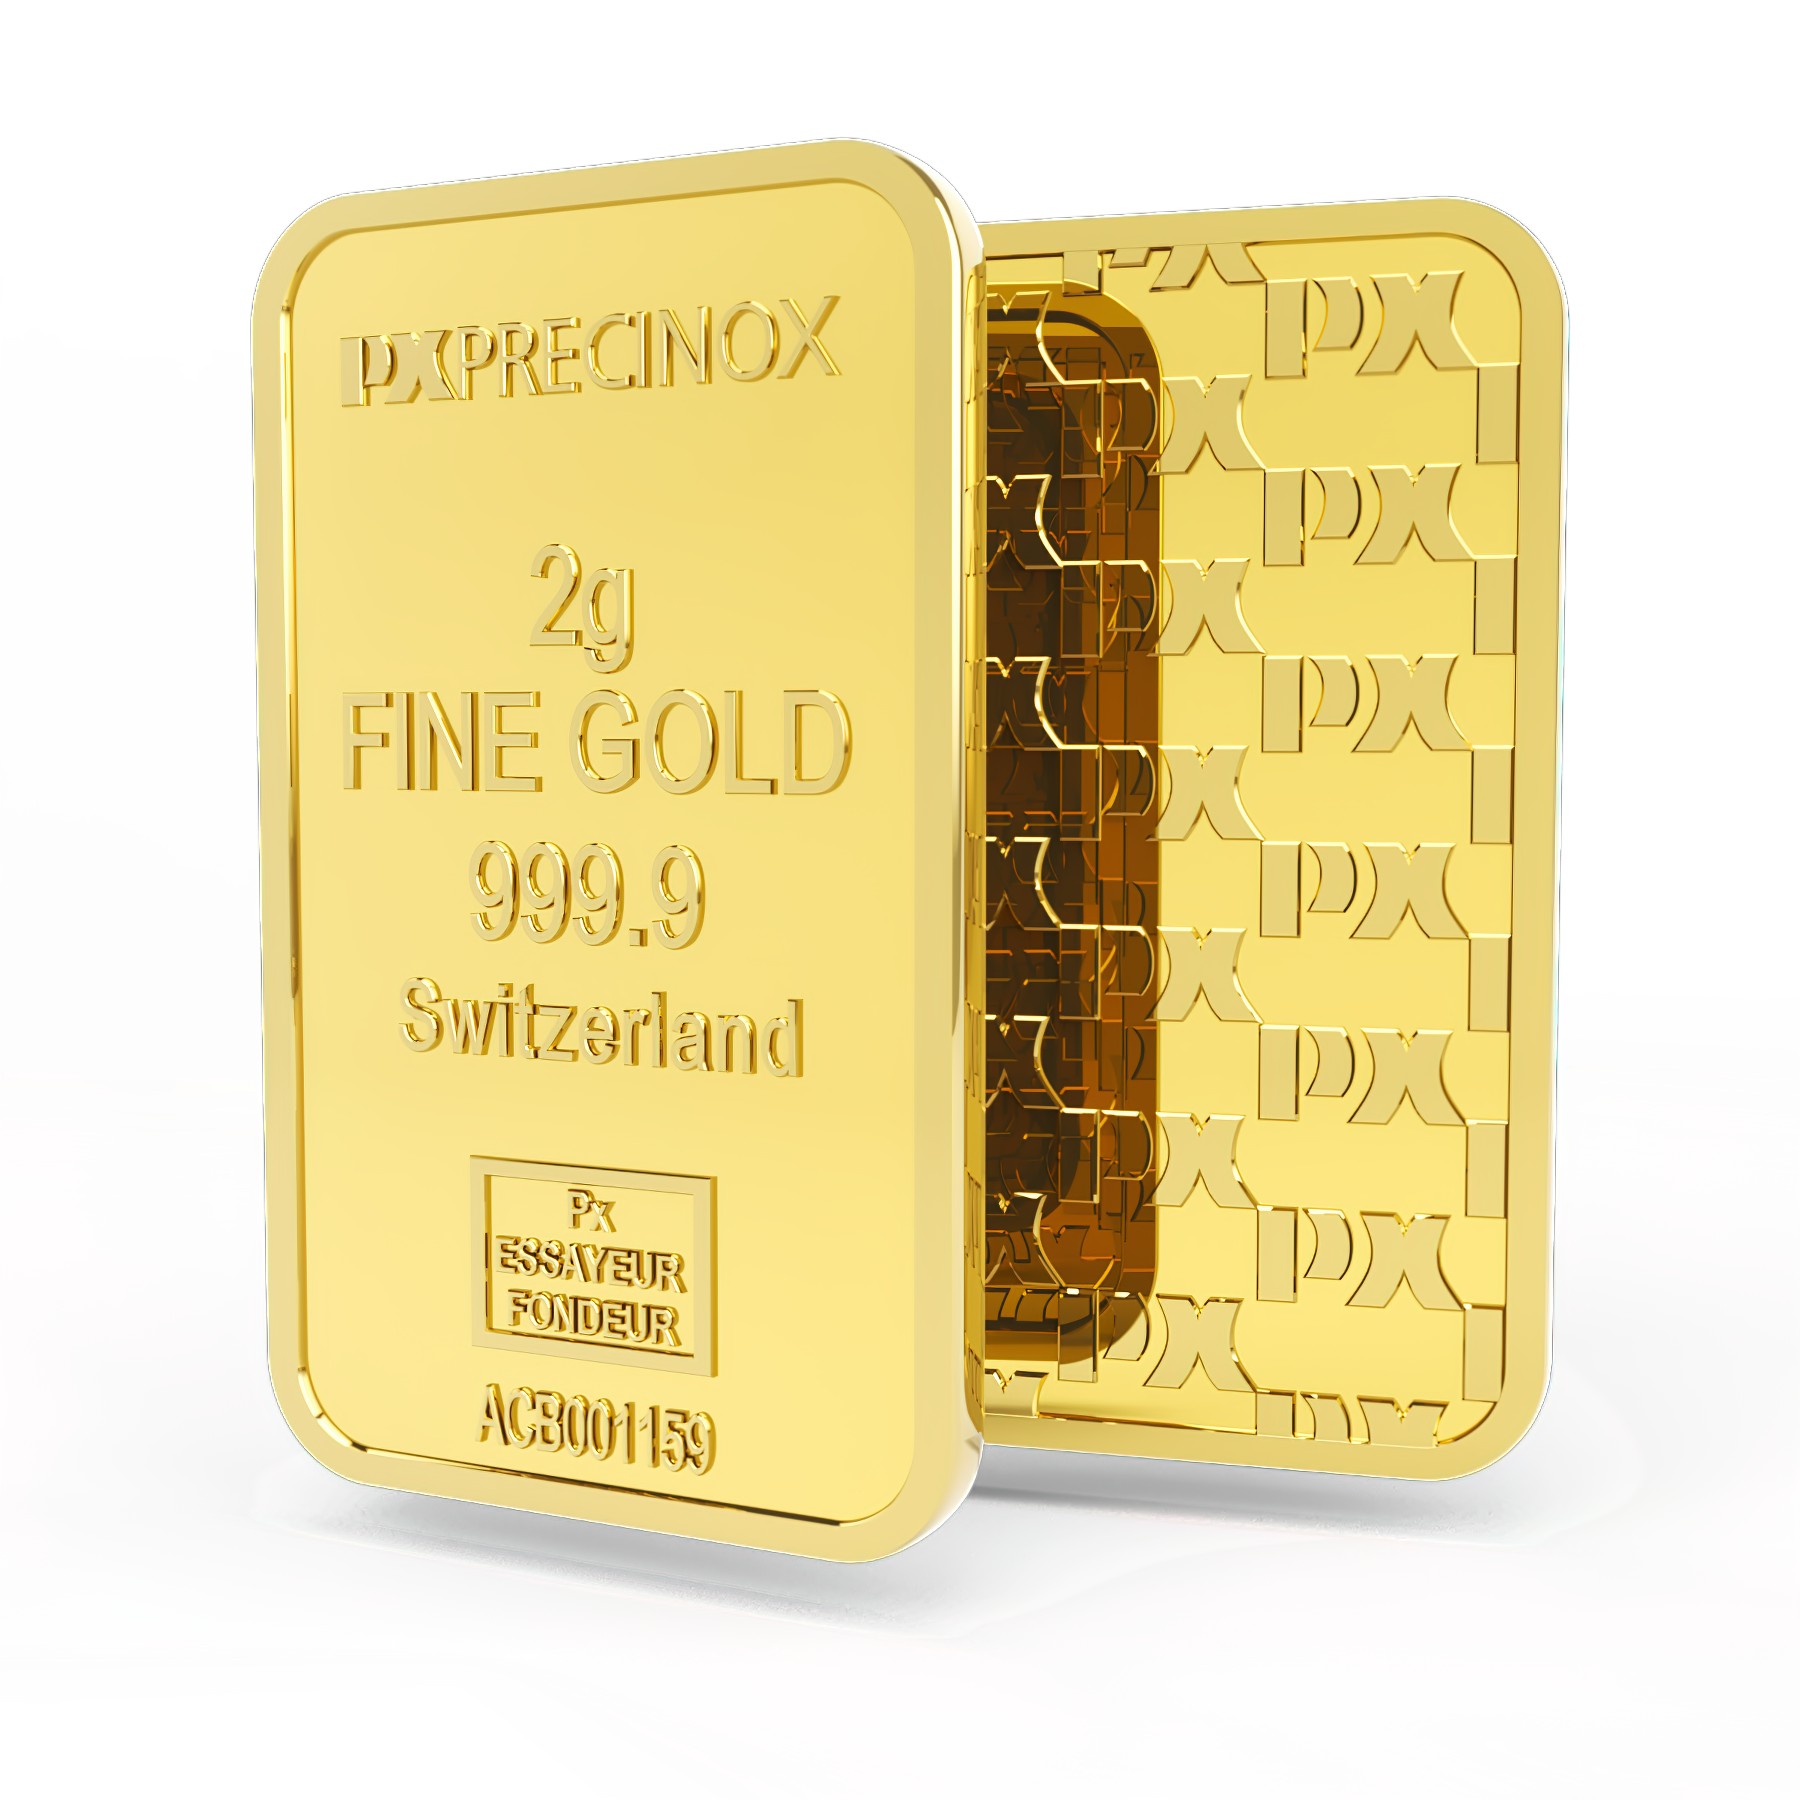 Lingou aur 2g, Elvetia, Fine Gold 999,9